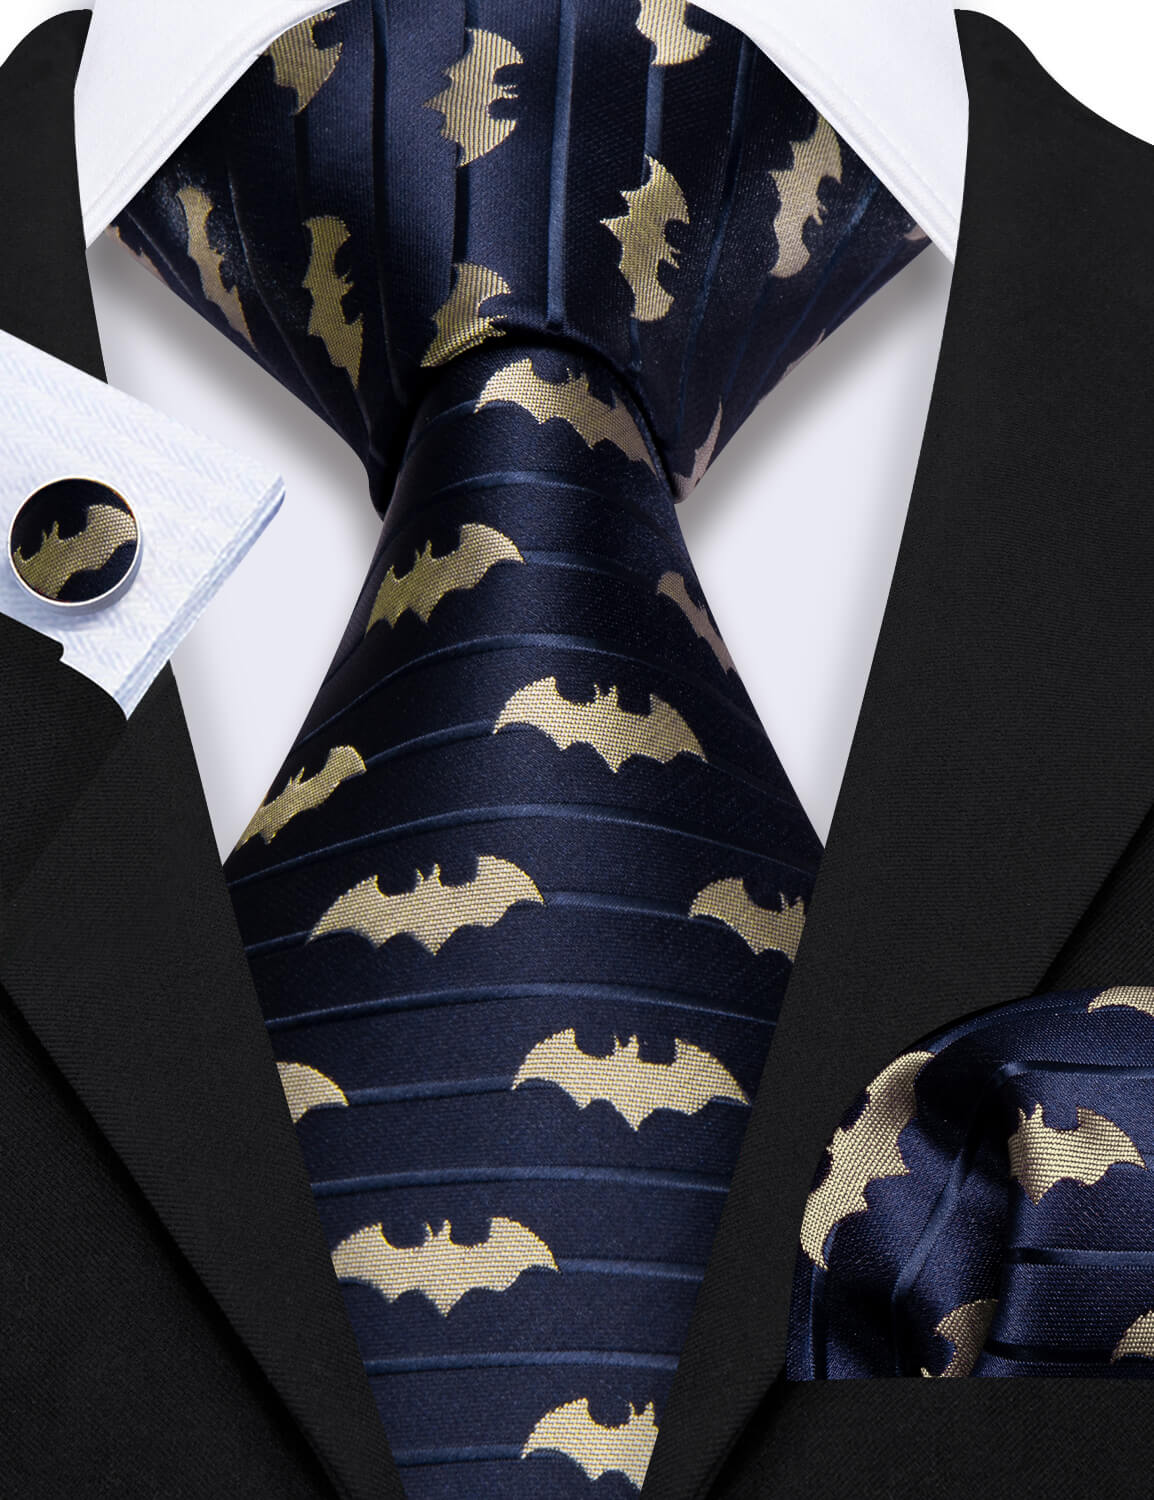 Barry.wang Blue Tie Navy Yellow Jacquard Woven Bat Men's Silk Tie Set